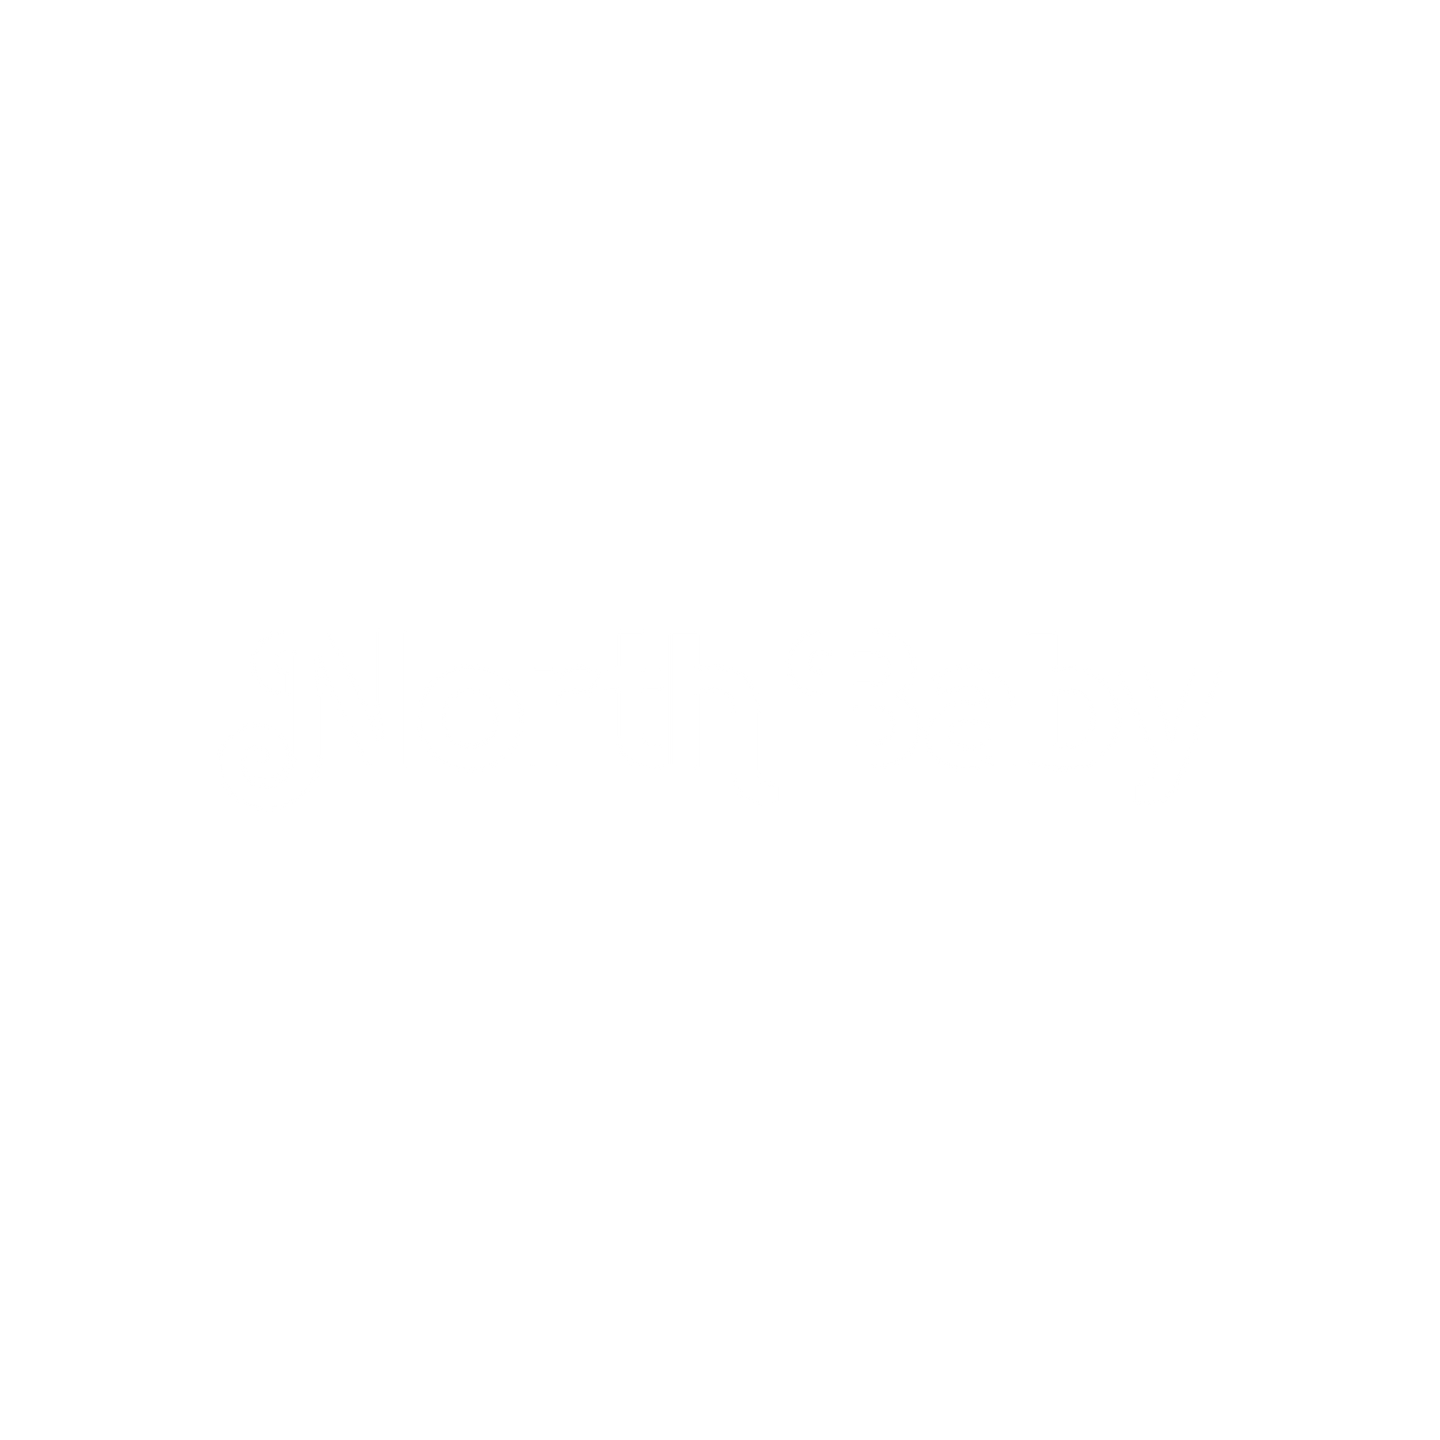 NORTH BABY